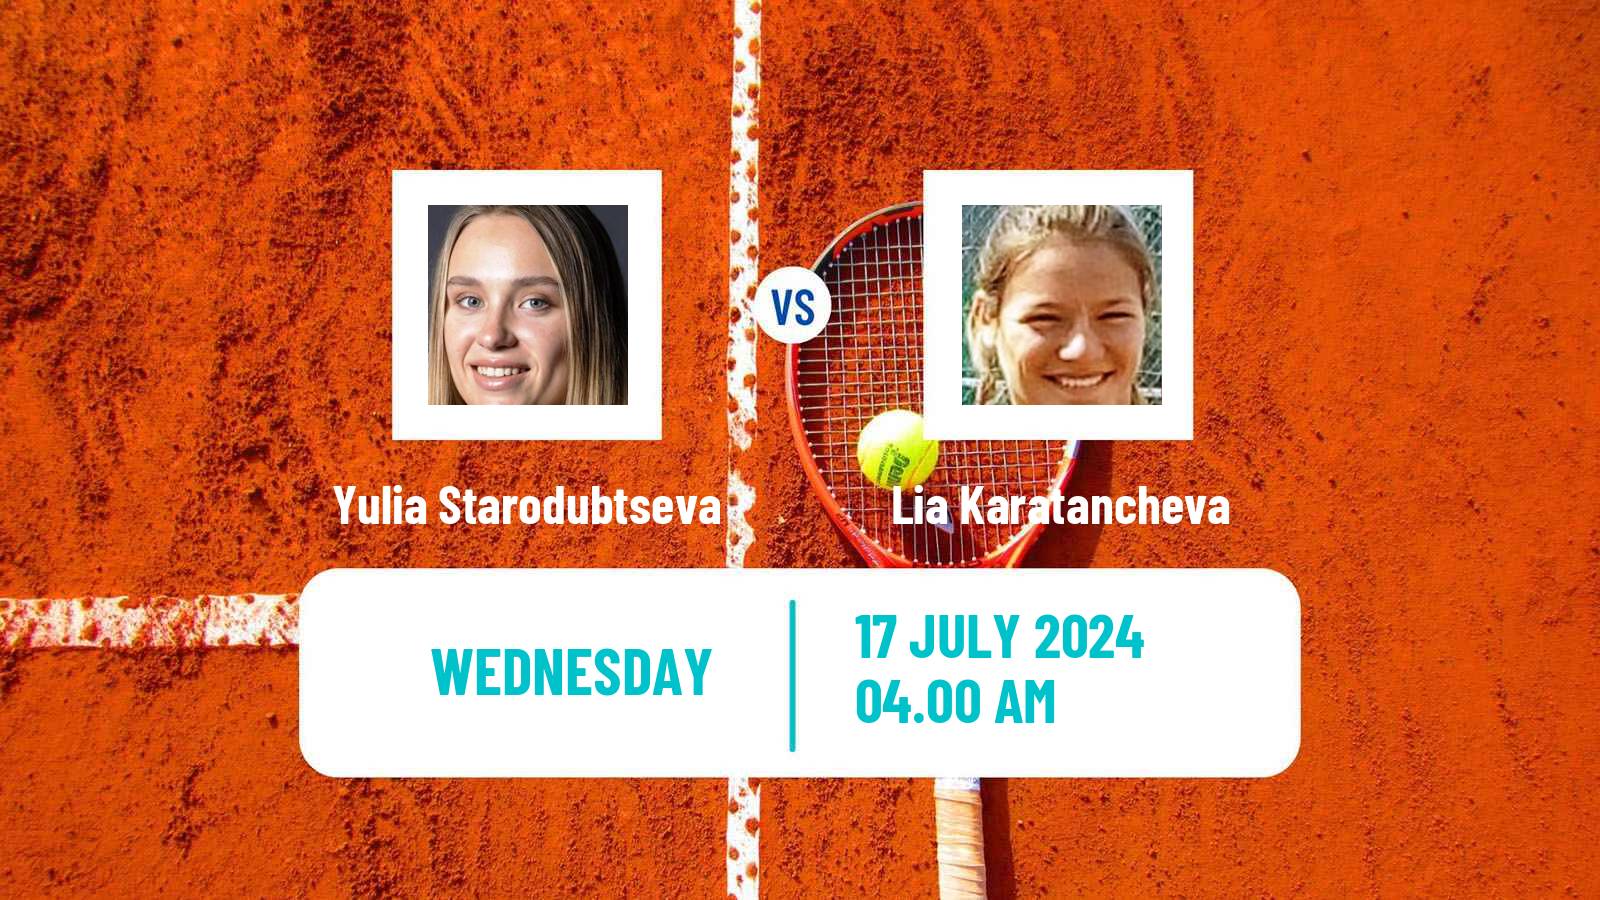 Tennis ITF W100 Vitoria Gasteiz Women Yulia Starodubtseva - Lia Karatancheva